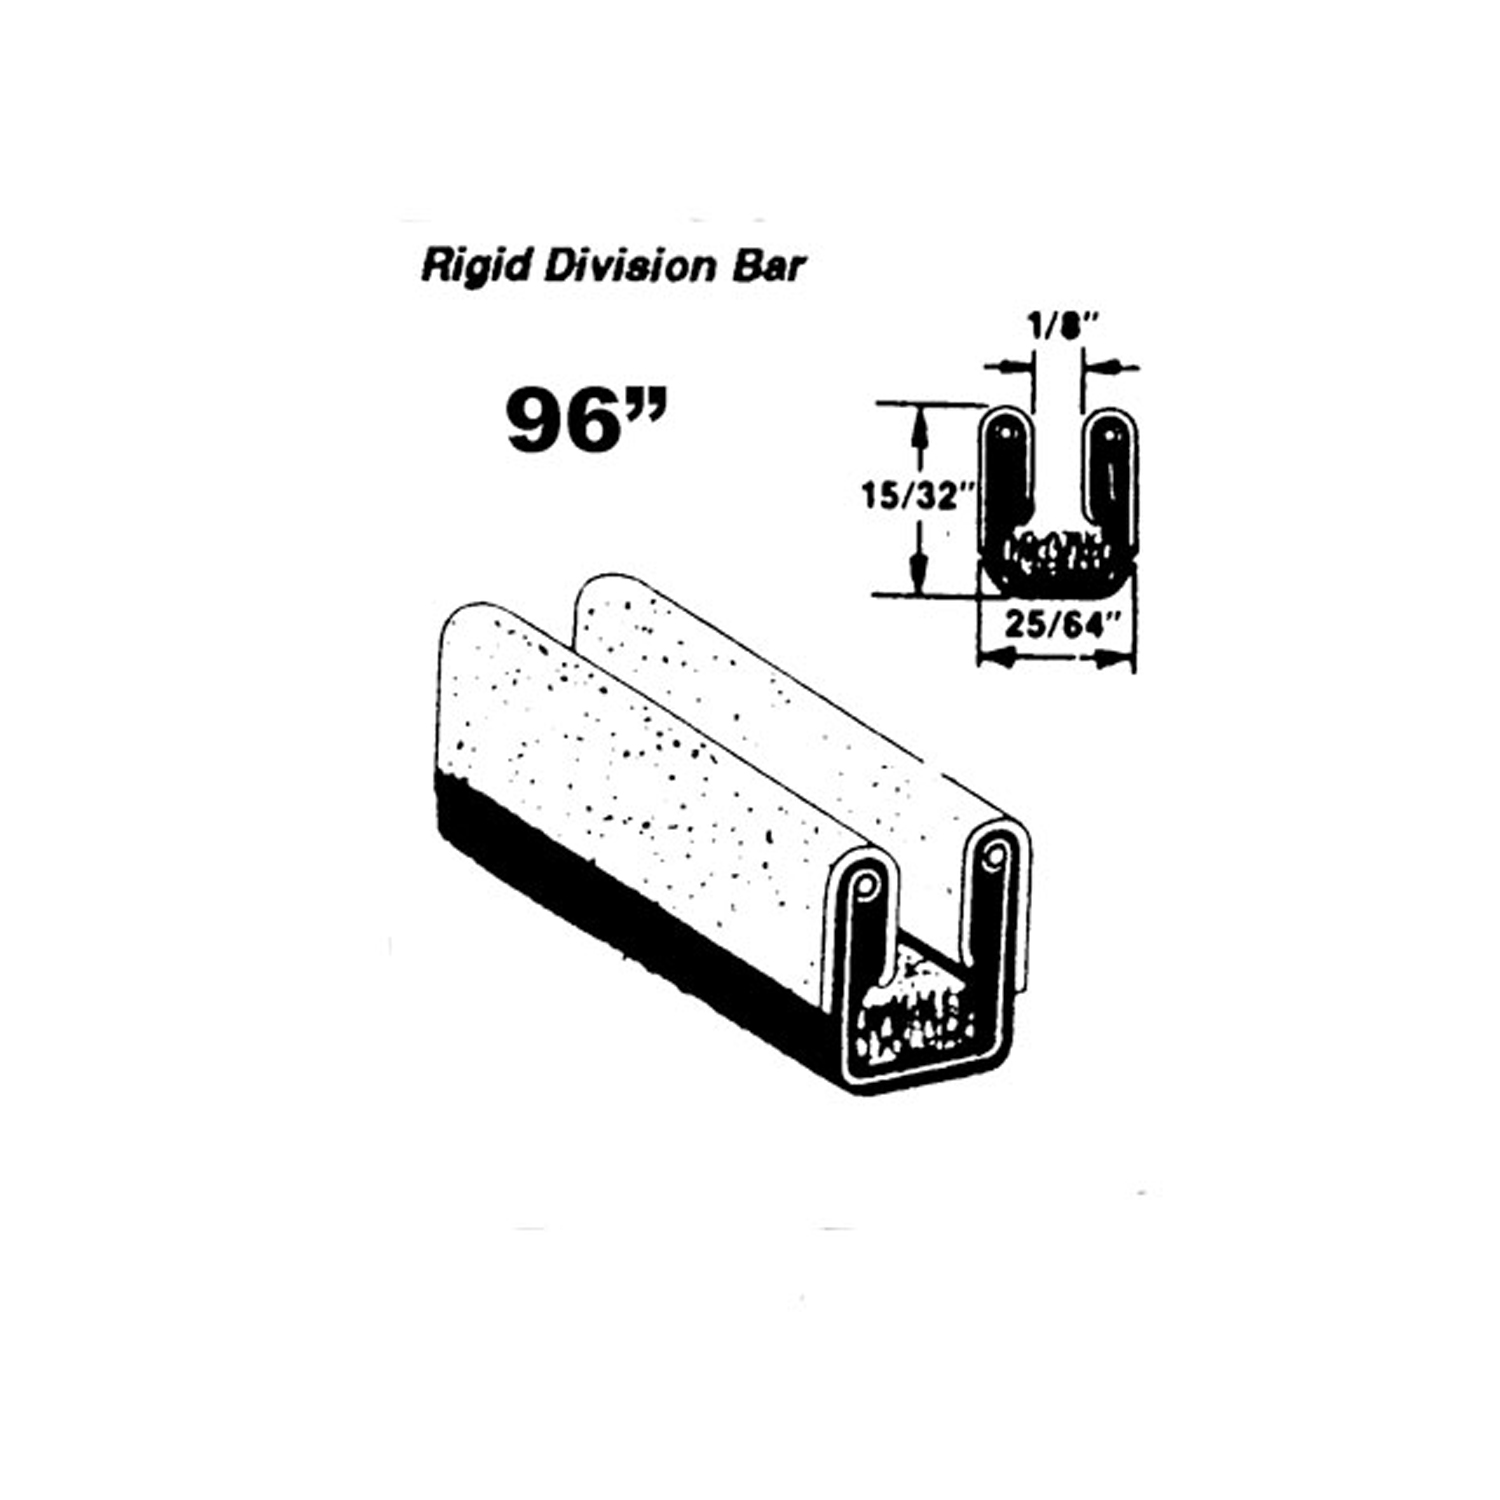 1959 DeSoto Fireflite Rigid division-bar run channel-WC 31-96